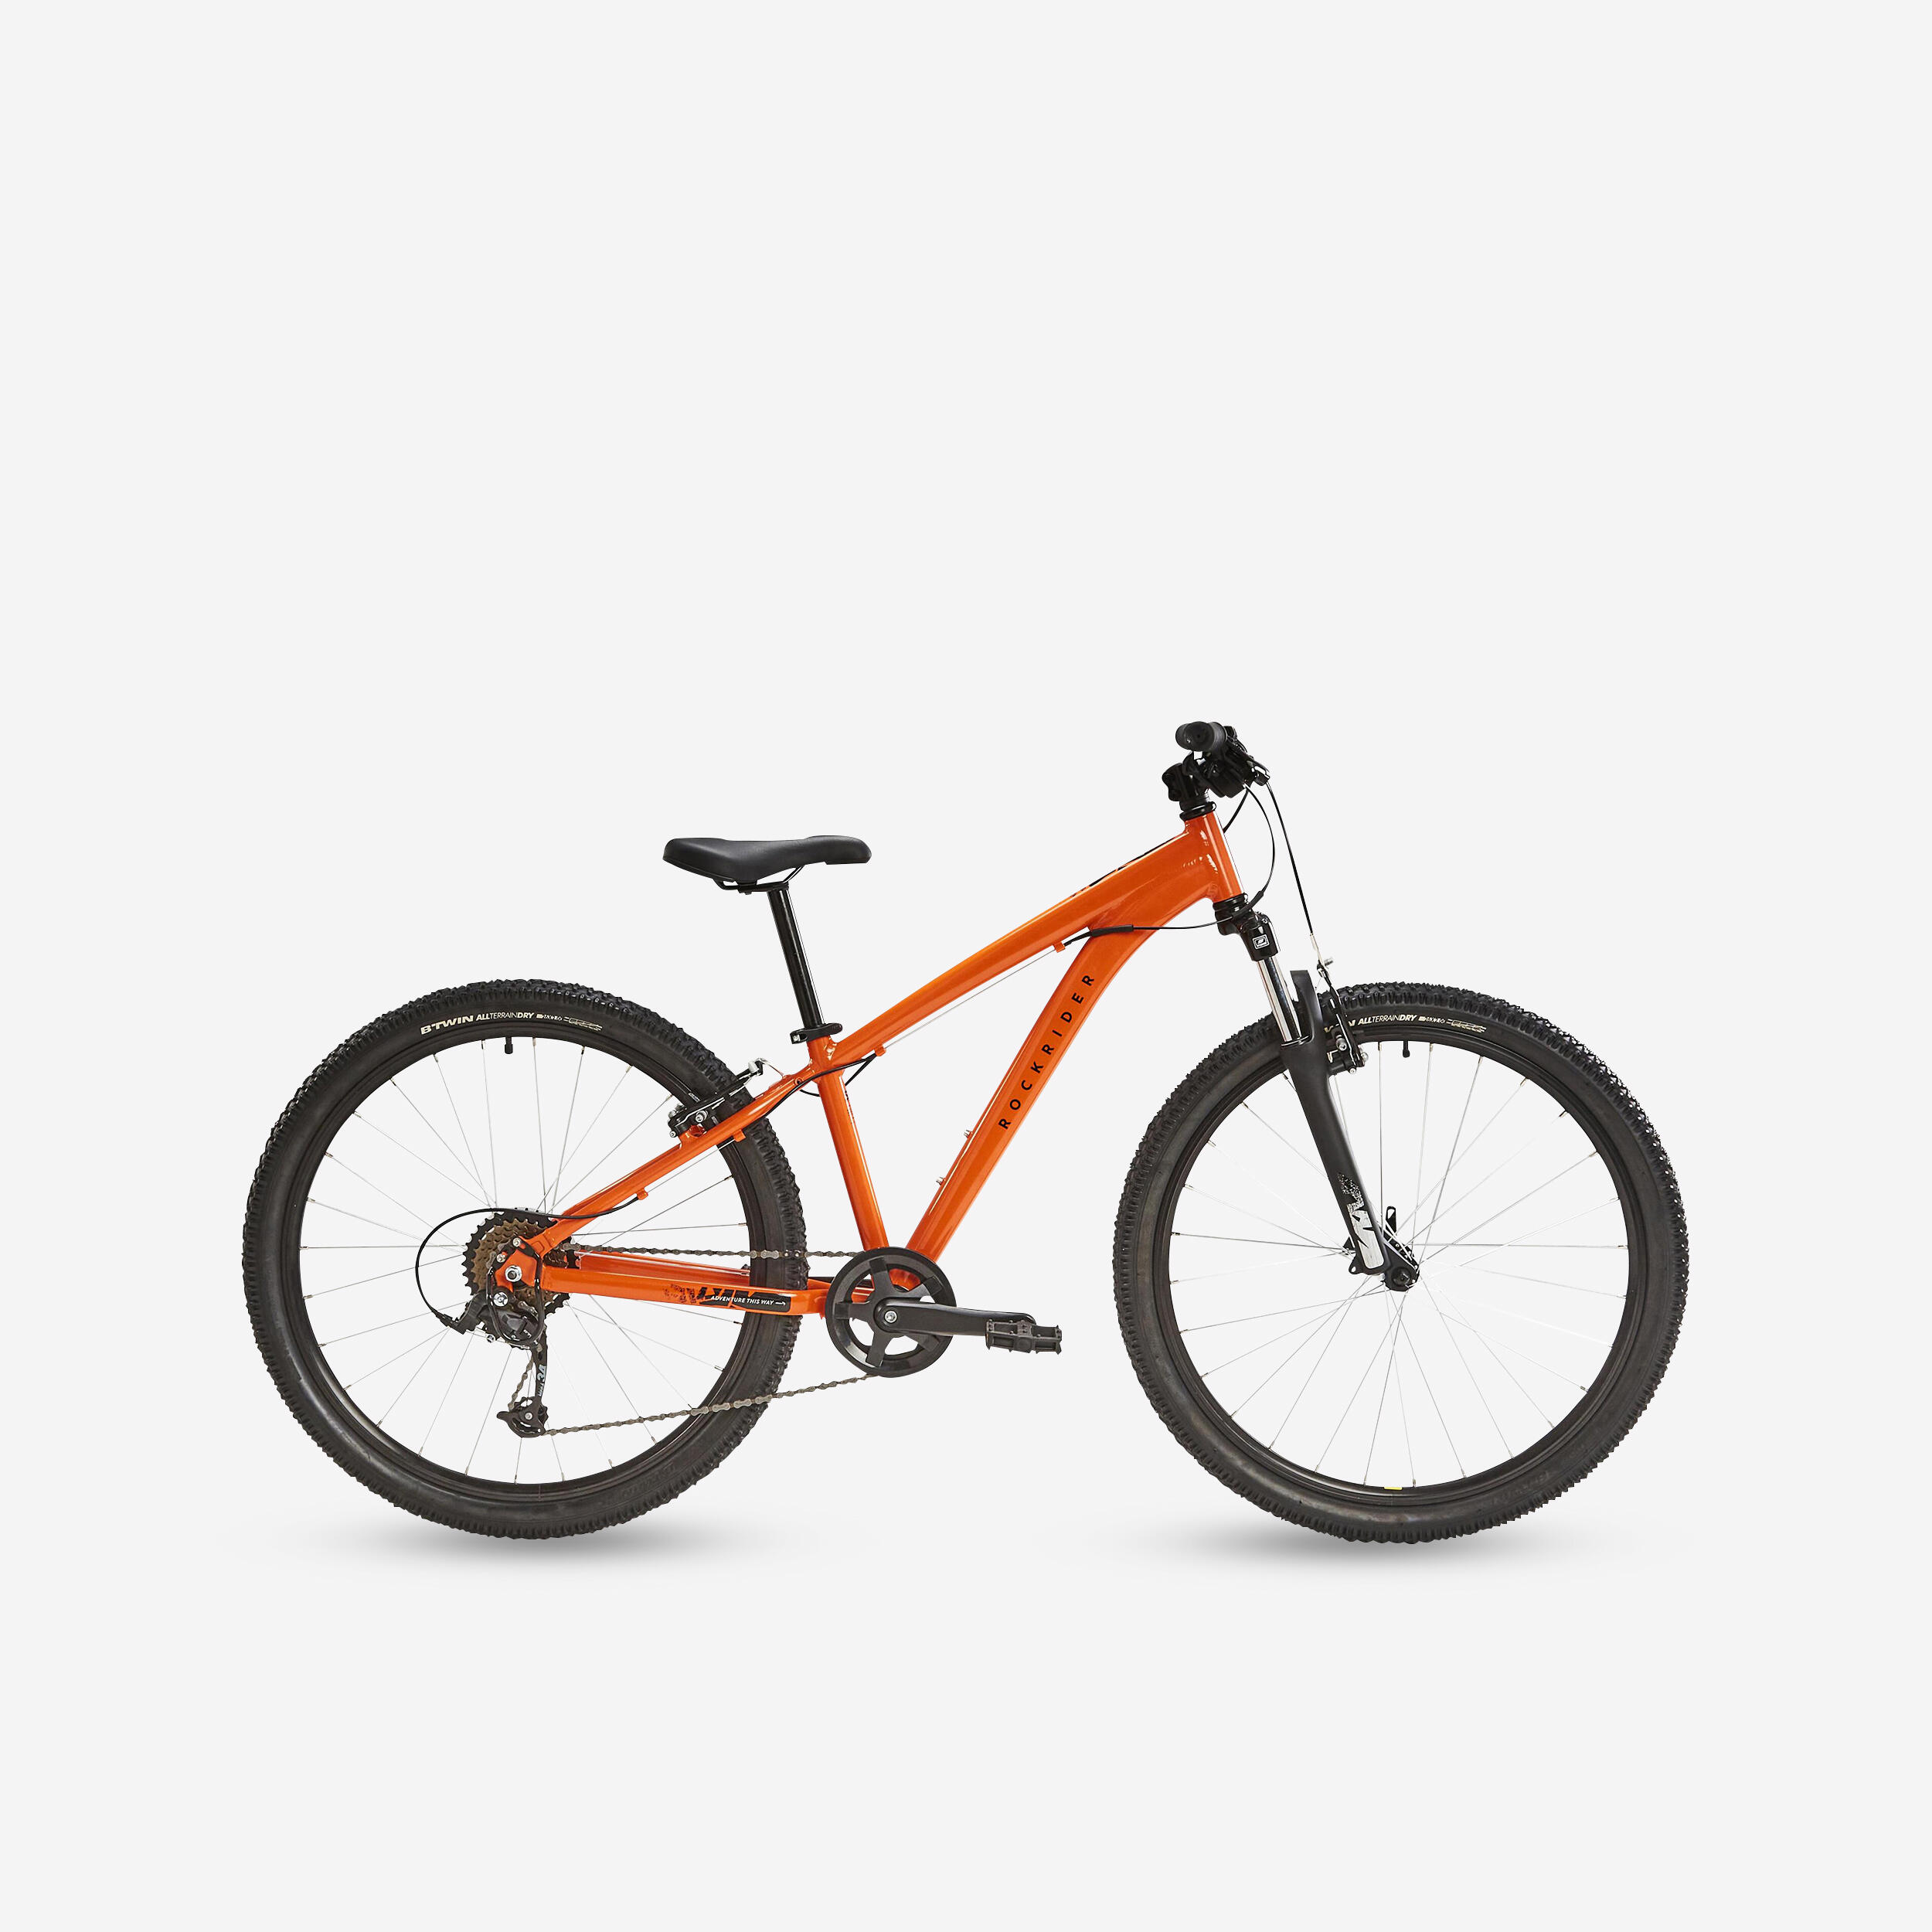 Kids' 26-inch lightweight aluminium mountain bike, orange 1/12